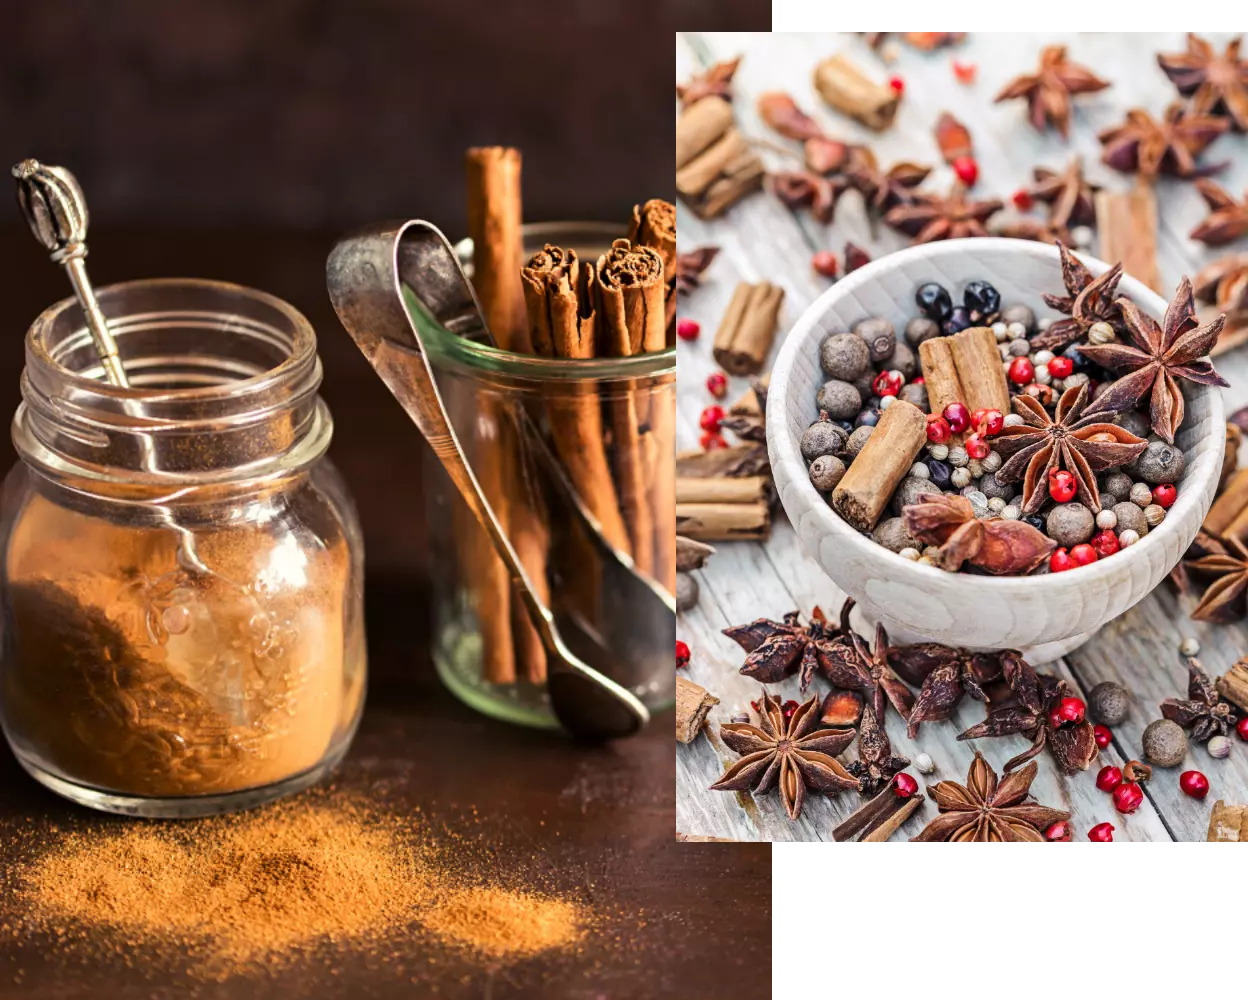 Ceylon cinnamon and dried herbs